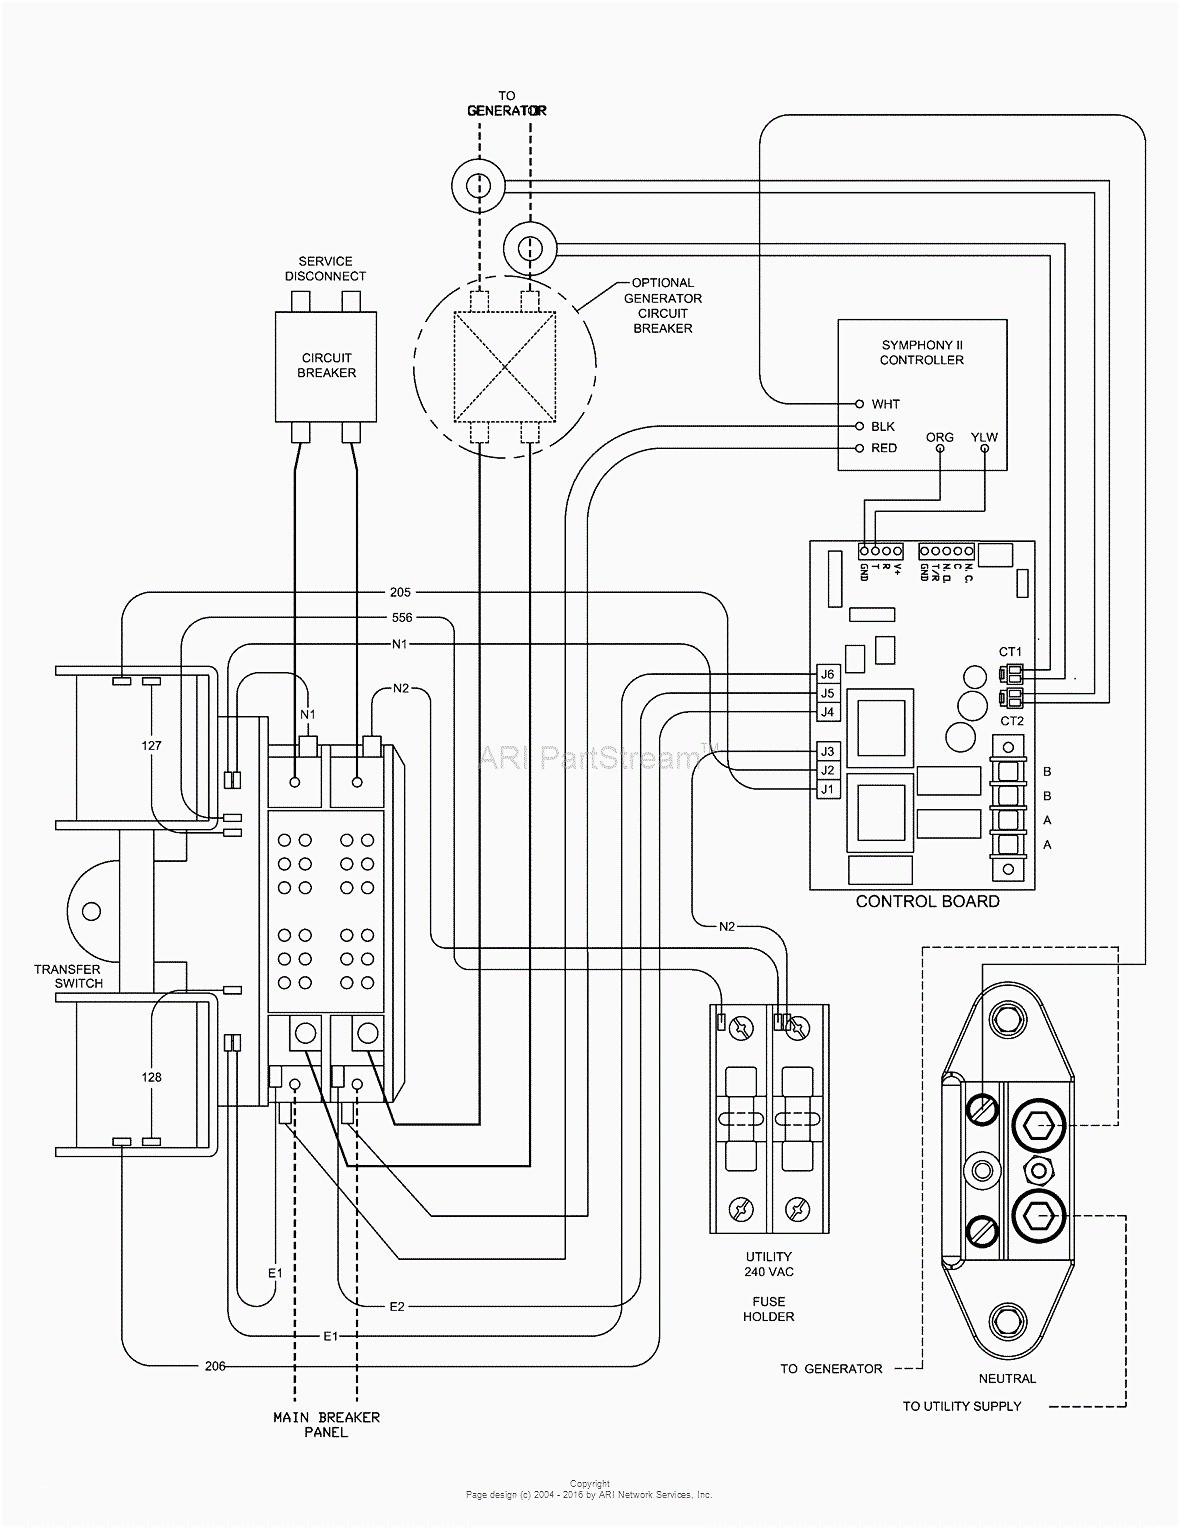 generac automatic transfer switch wiring diagram inspirational fancy rh chromatex me 3 Phase Automatic Transfer Switch Diagram Generac Generator Transfer